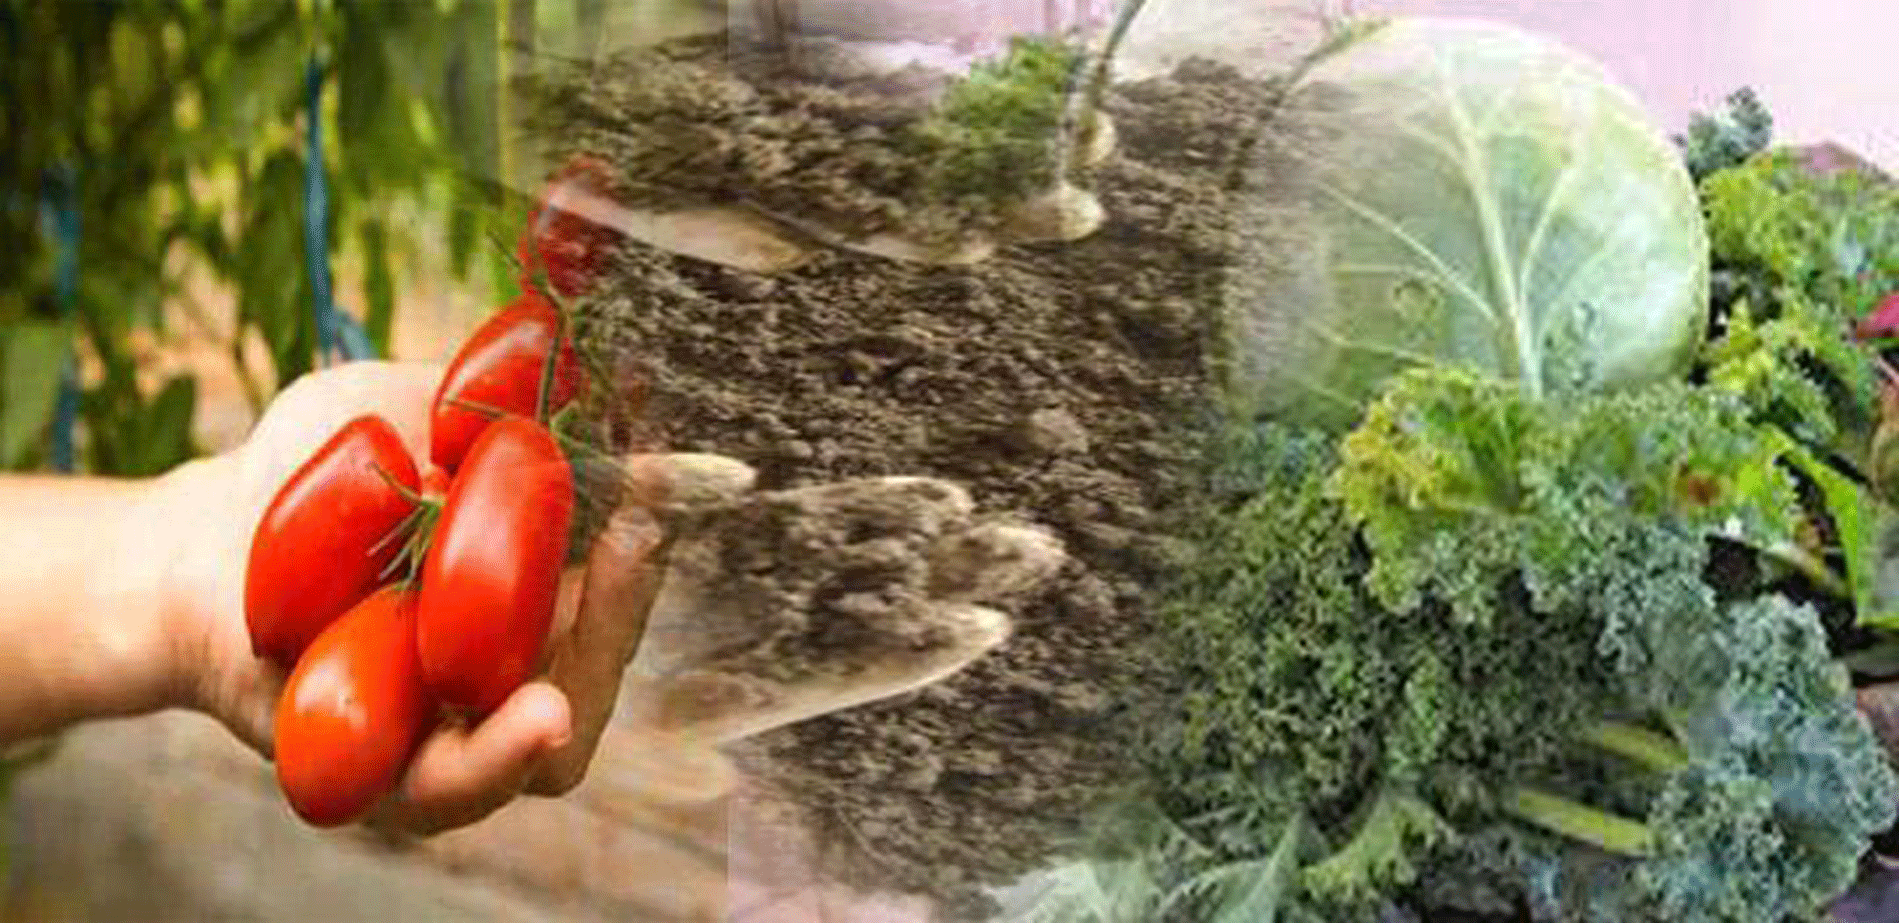 Benefits from organic farming